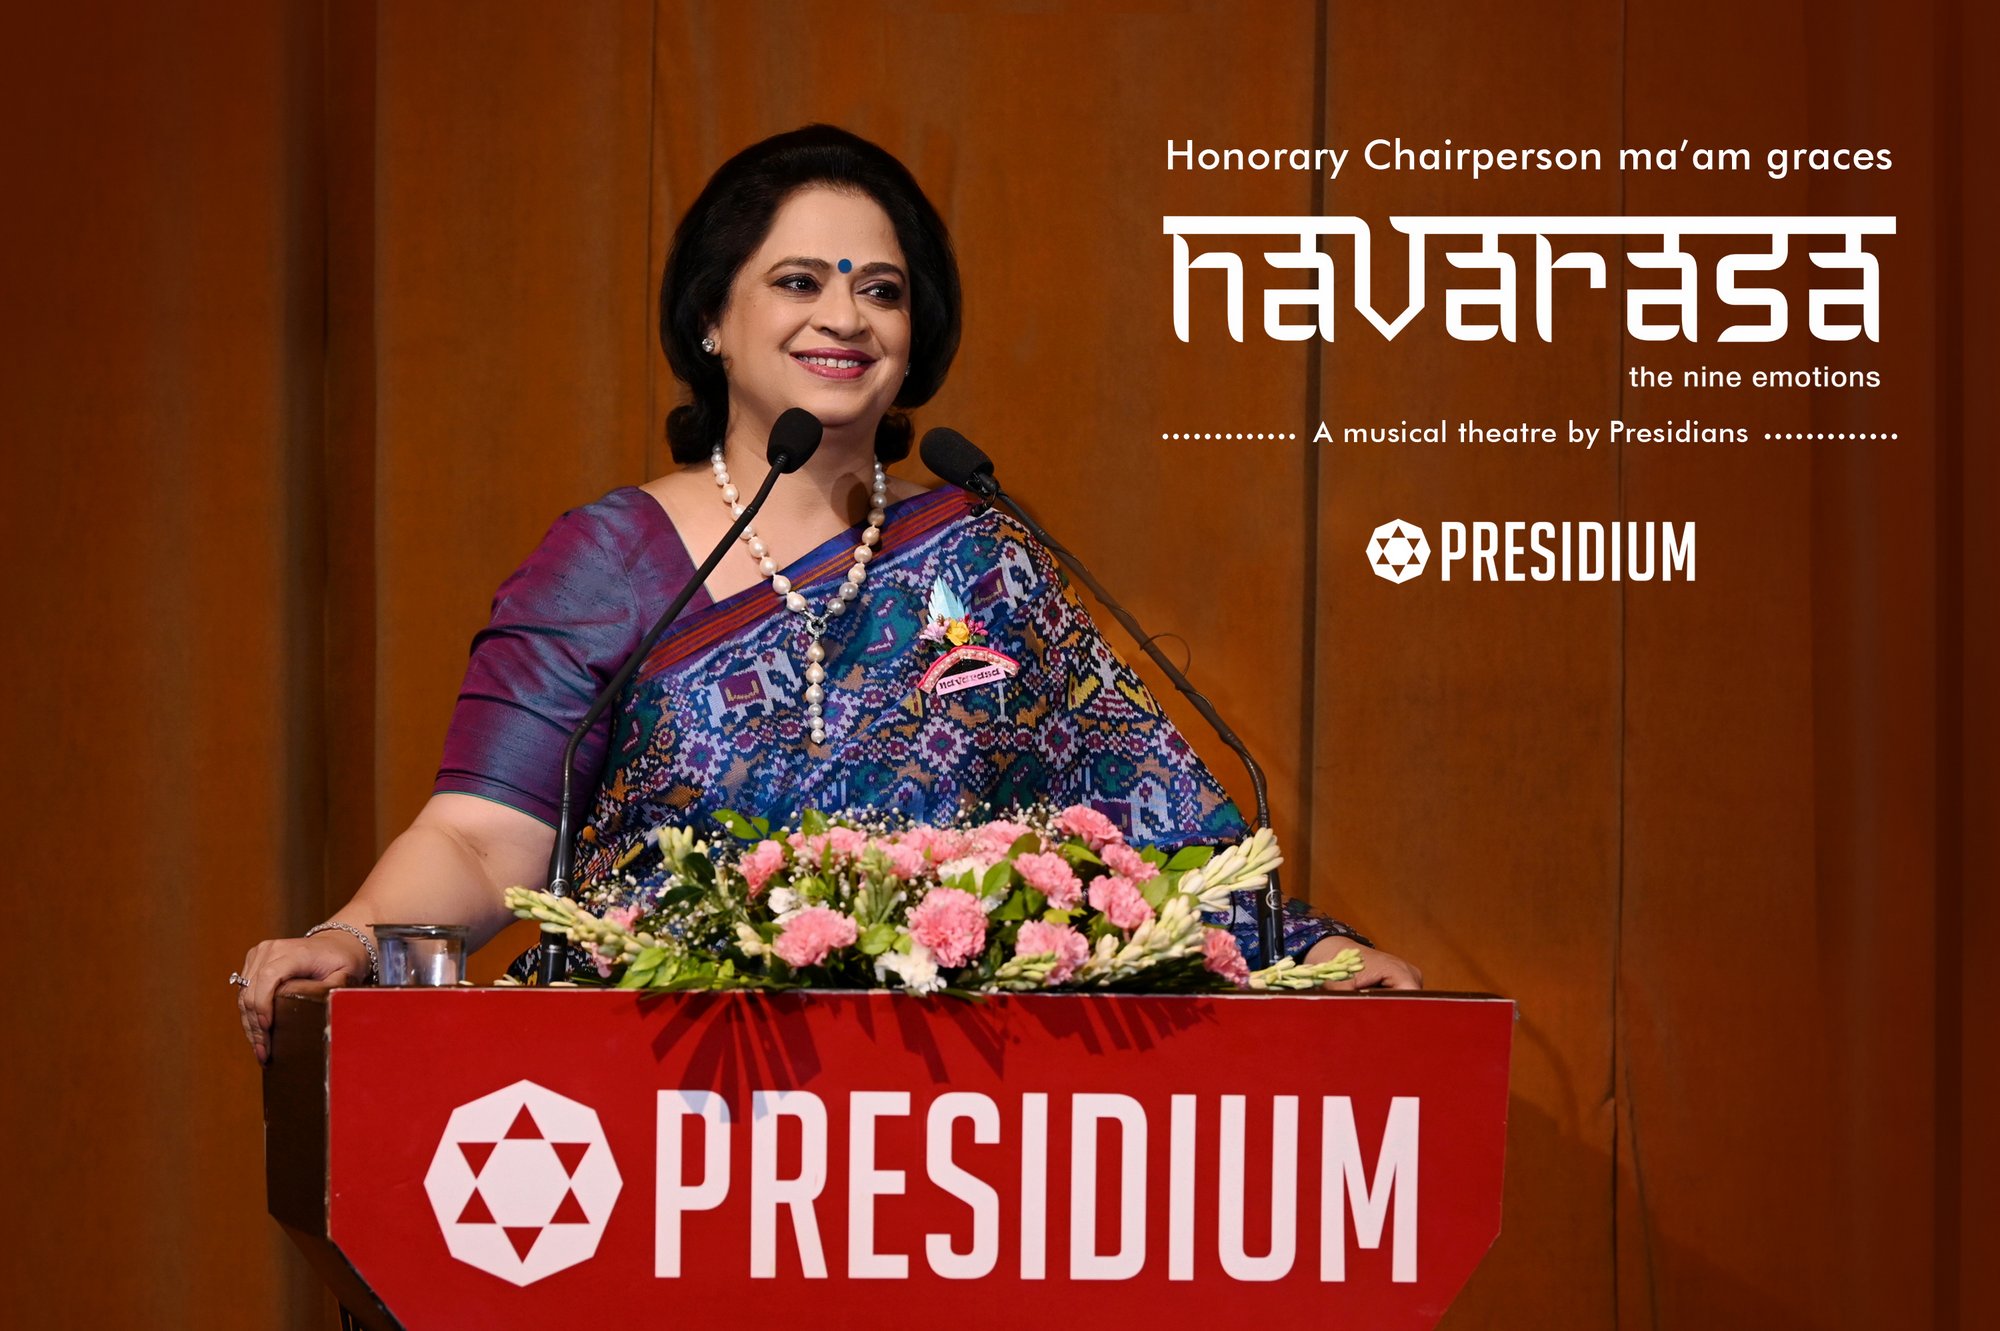 Presidium Indirapuram, NAVARASA: THE MAJESTIC PORTRAYAL OF THE NINE EMOTIONS BY PRESIDIANS